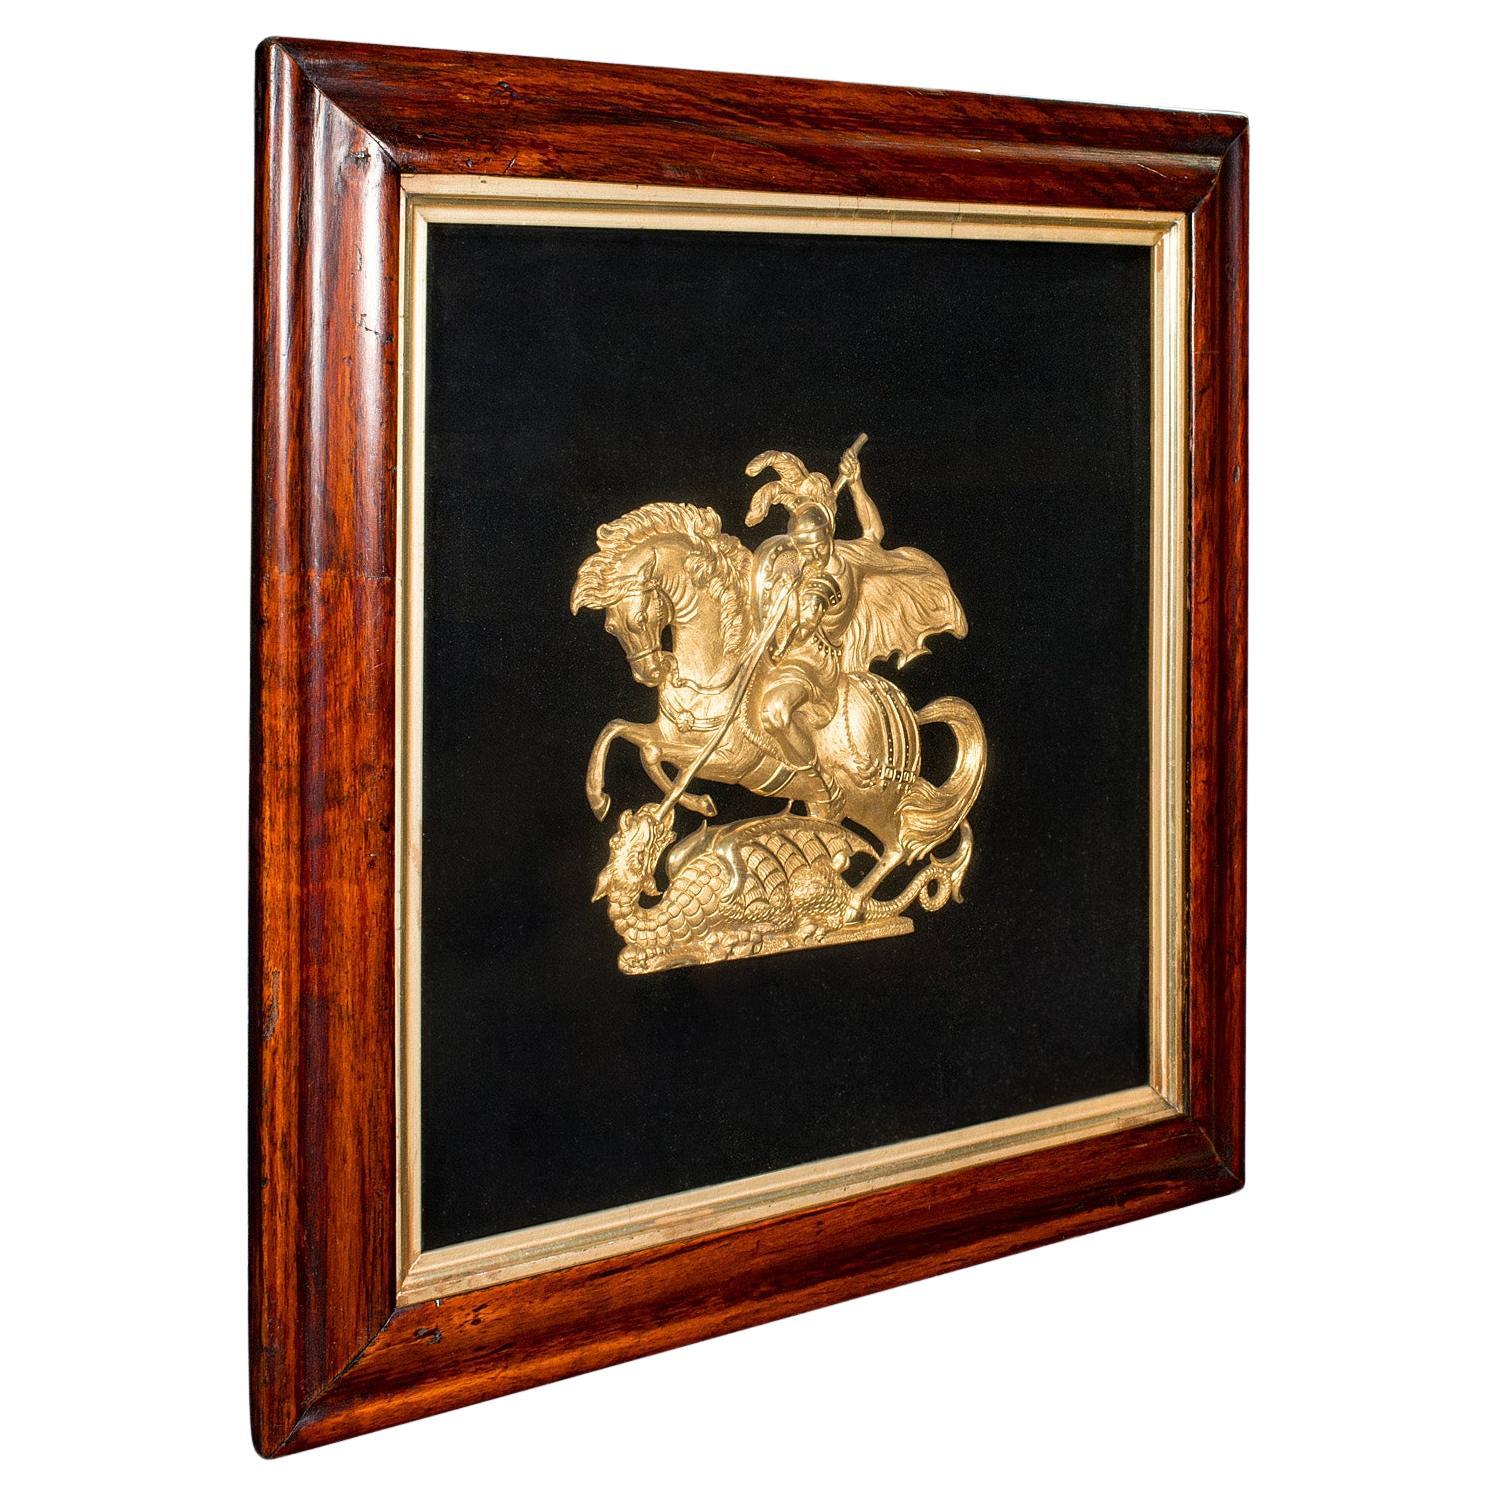 Antique George & The Dragon Display Plaque, English, Decorative Relief, Regency